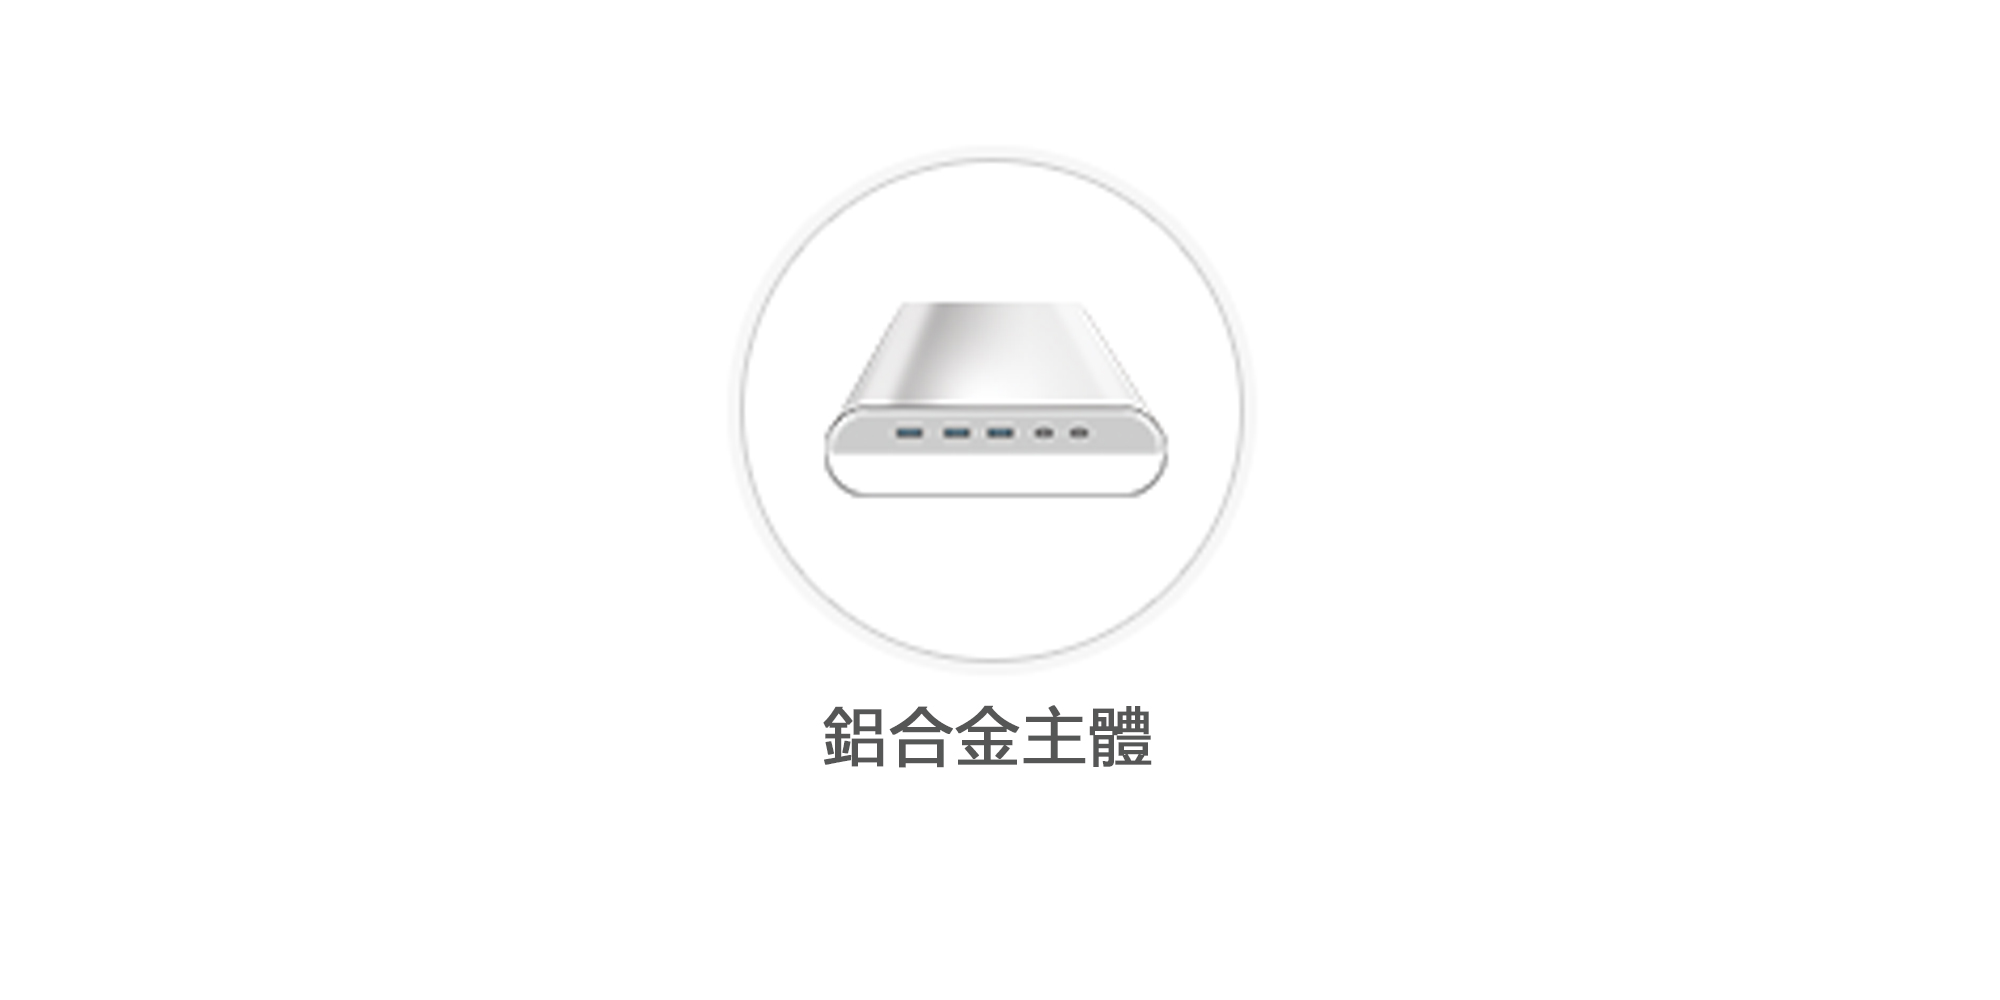 Monitormate Probase HD USB TYPE-C 多功能螢幕架(for Macbook Pro) 北歐銀